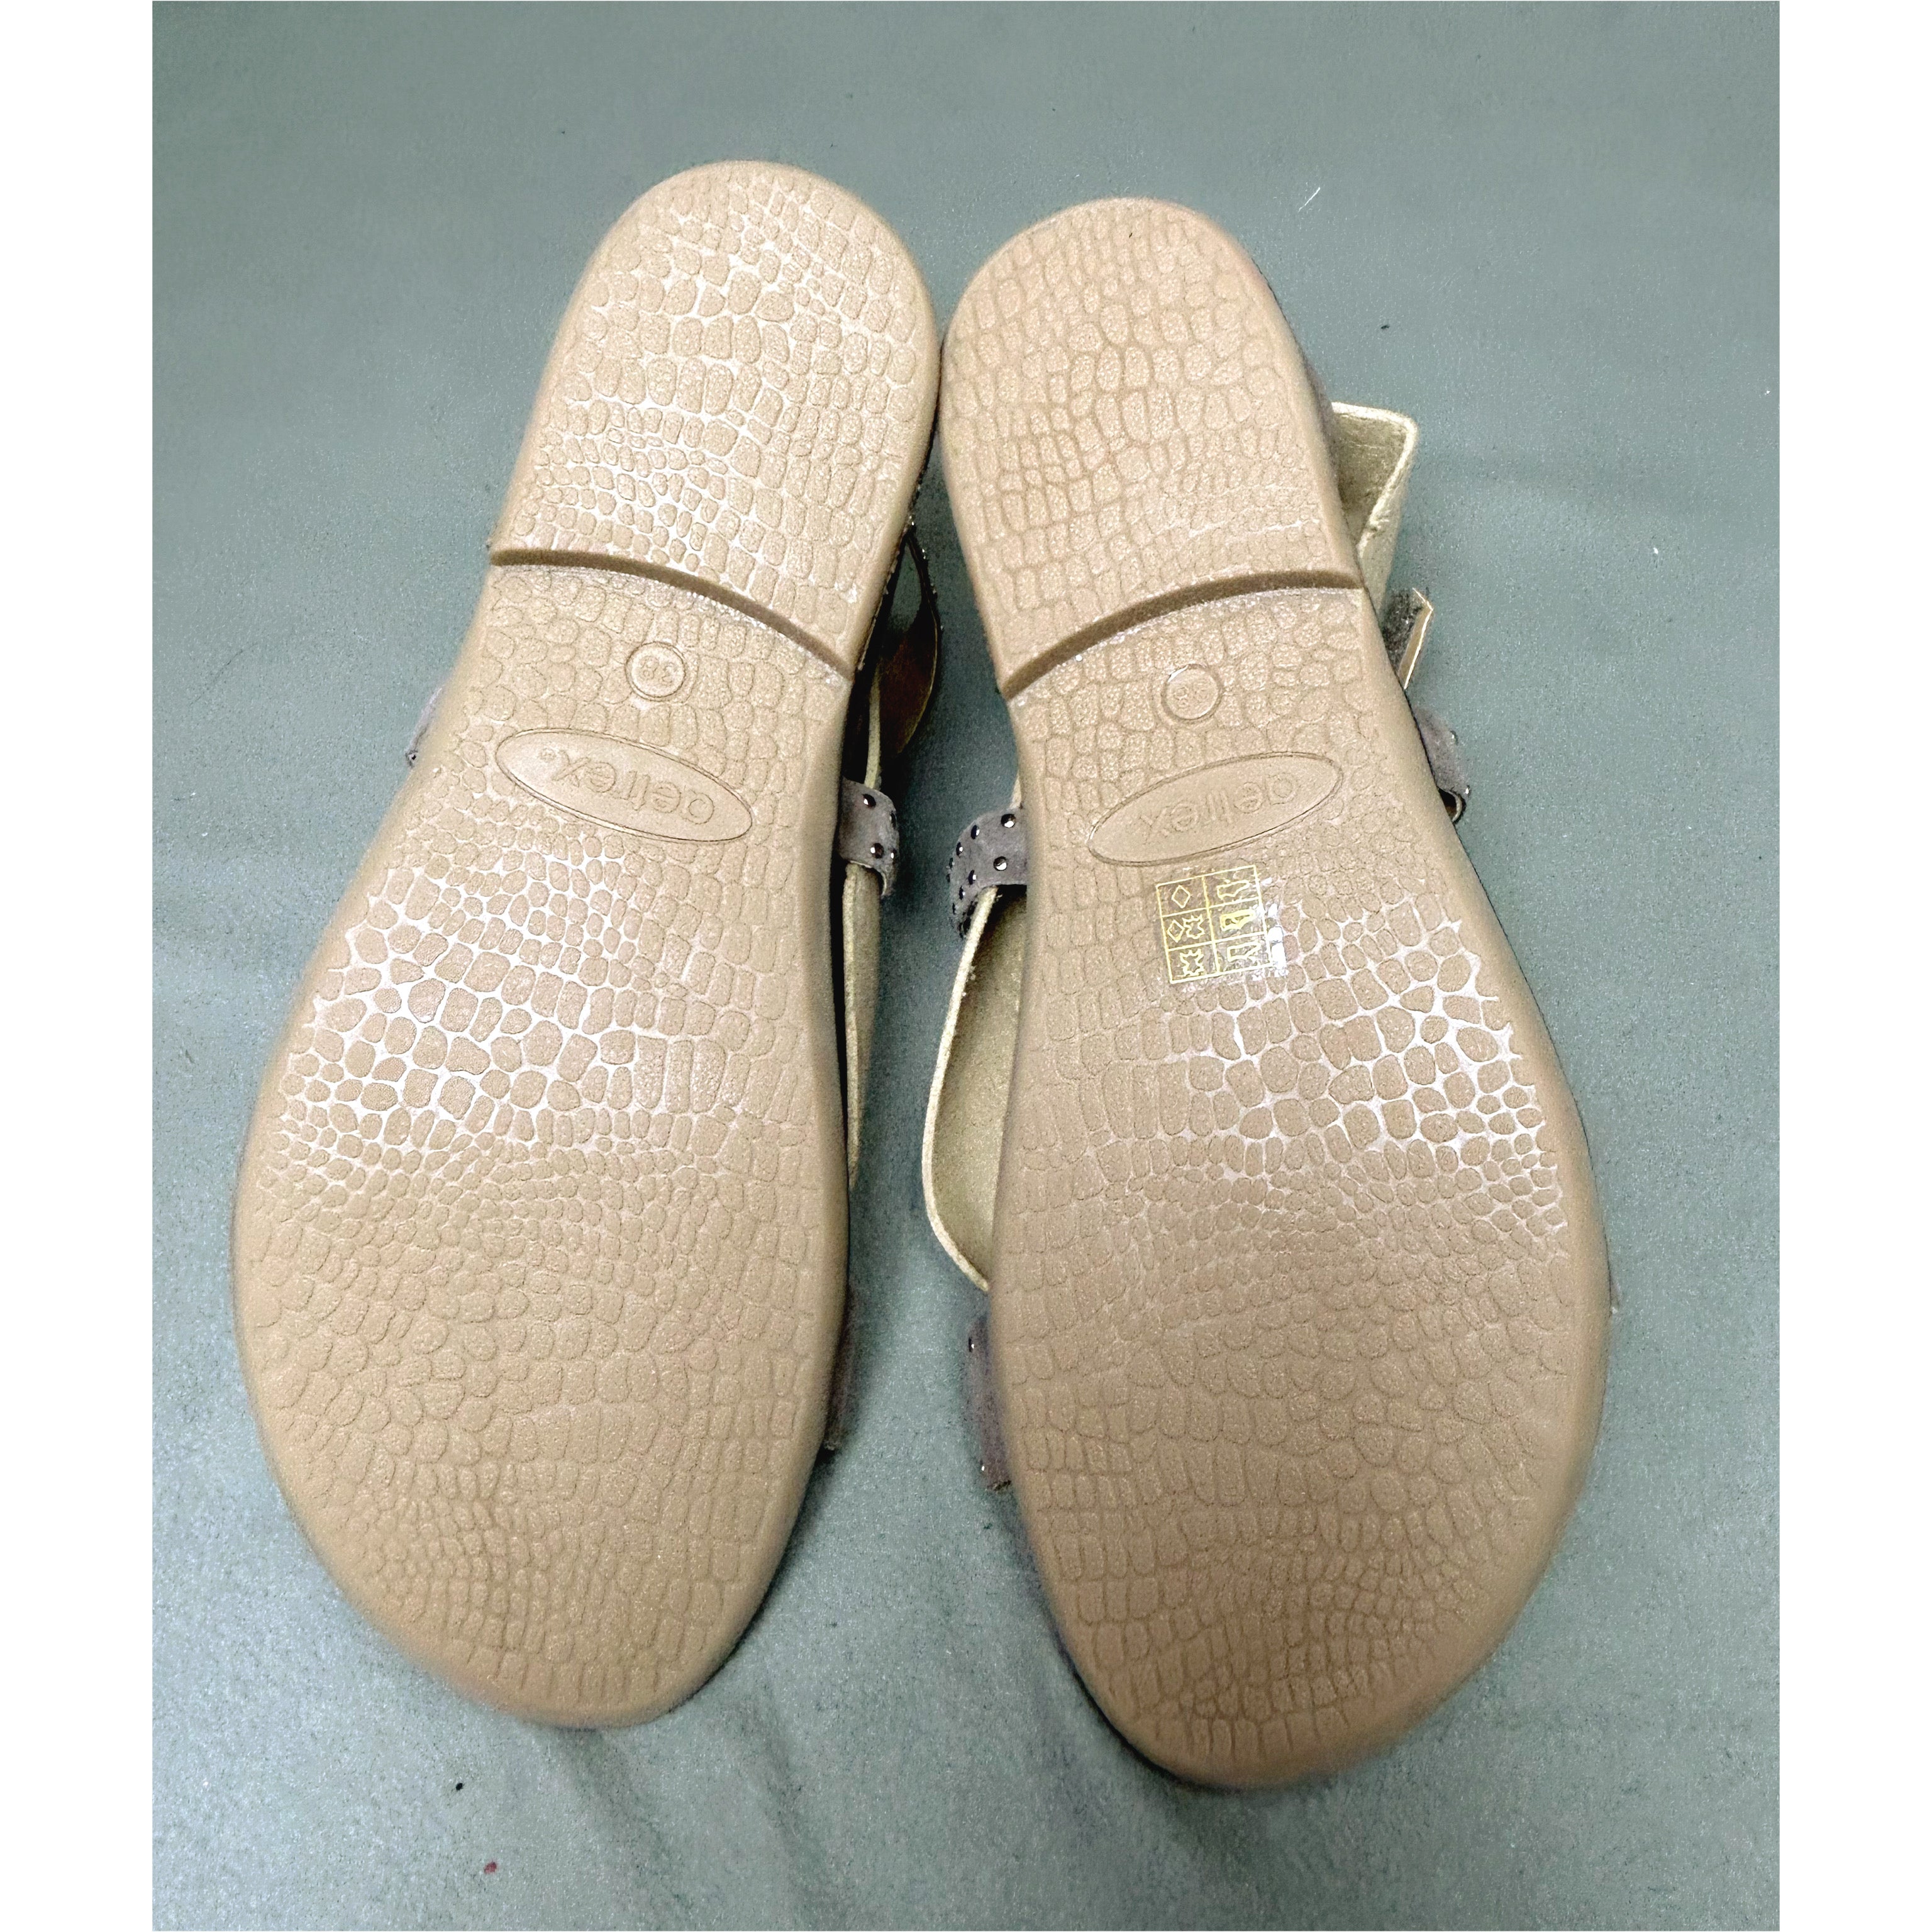 Aetrex mocha suede sandals, size 7.5-8, BRAND NEW!